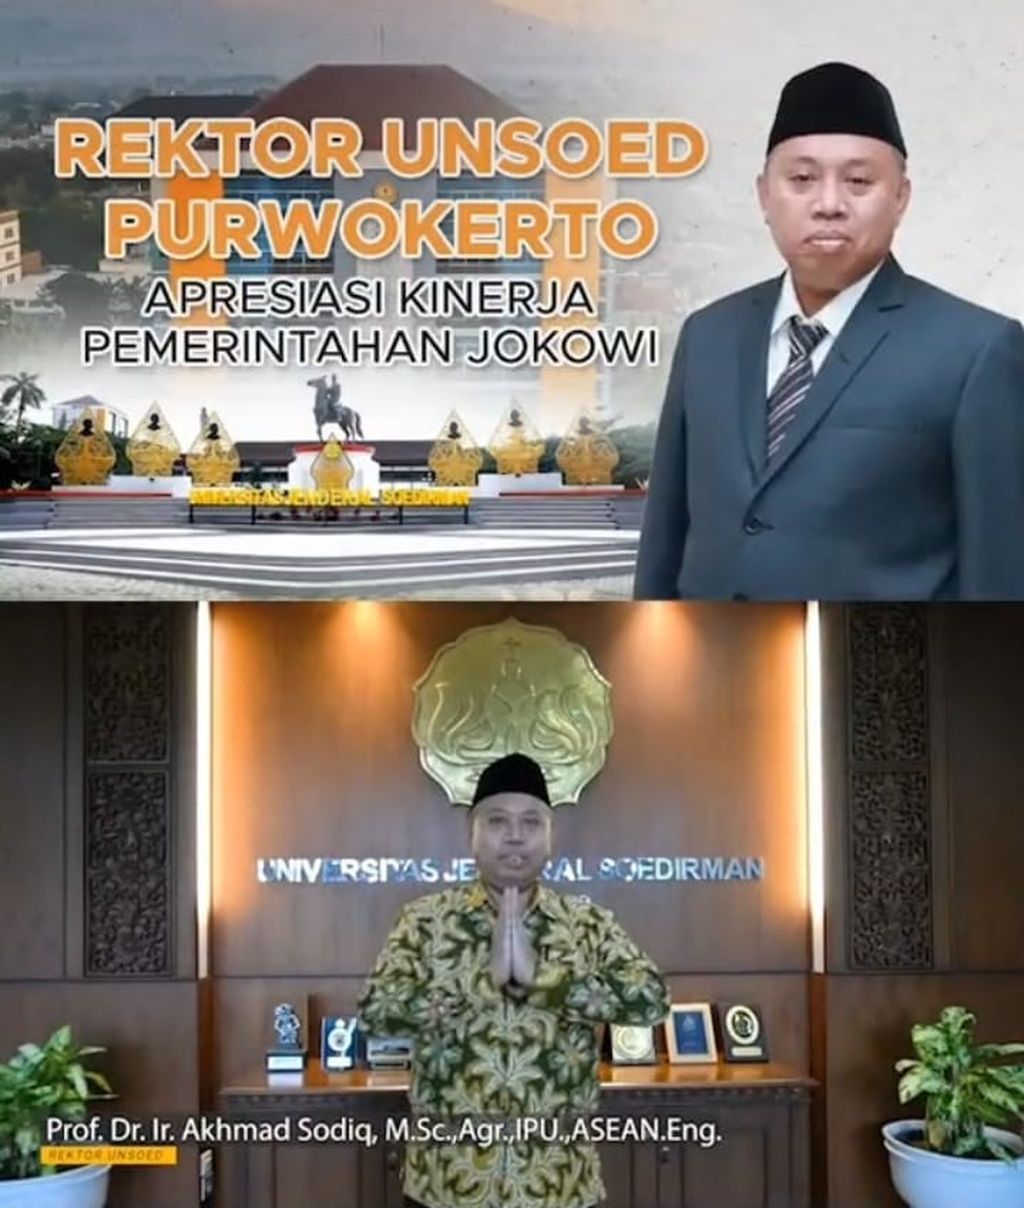 Tangkapan layar video pernyataan Rektor Universitas Jenderal Soedirman (Unsoed), Purwokerto, Akhmad Sodiq.